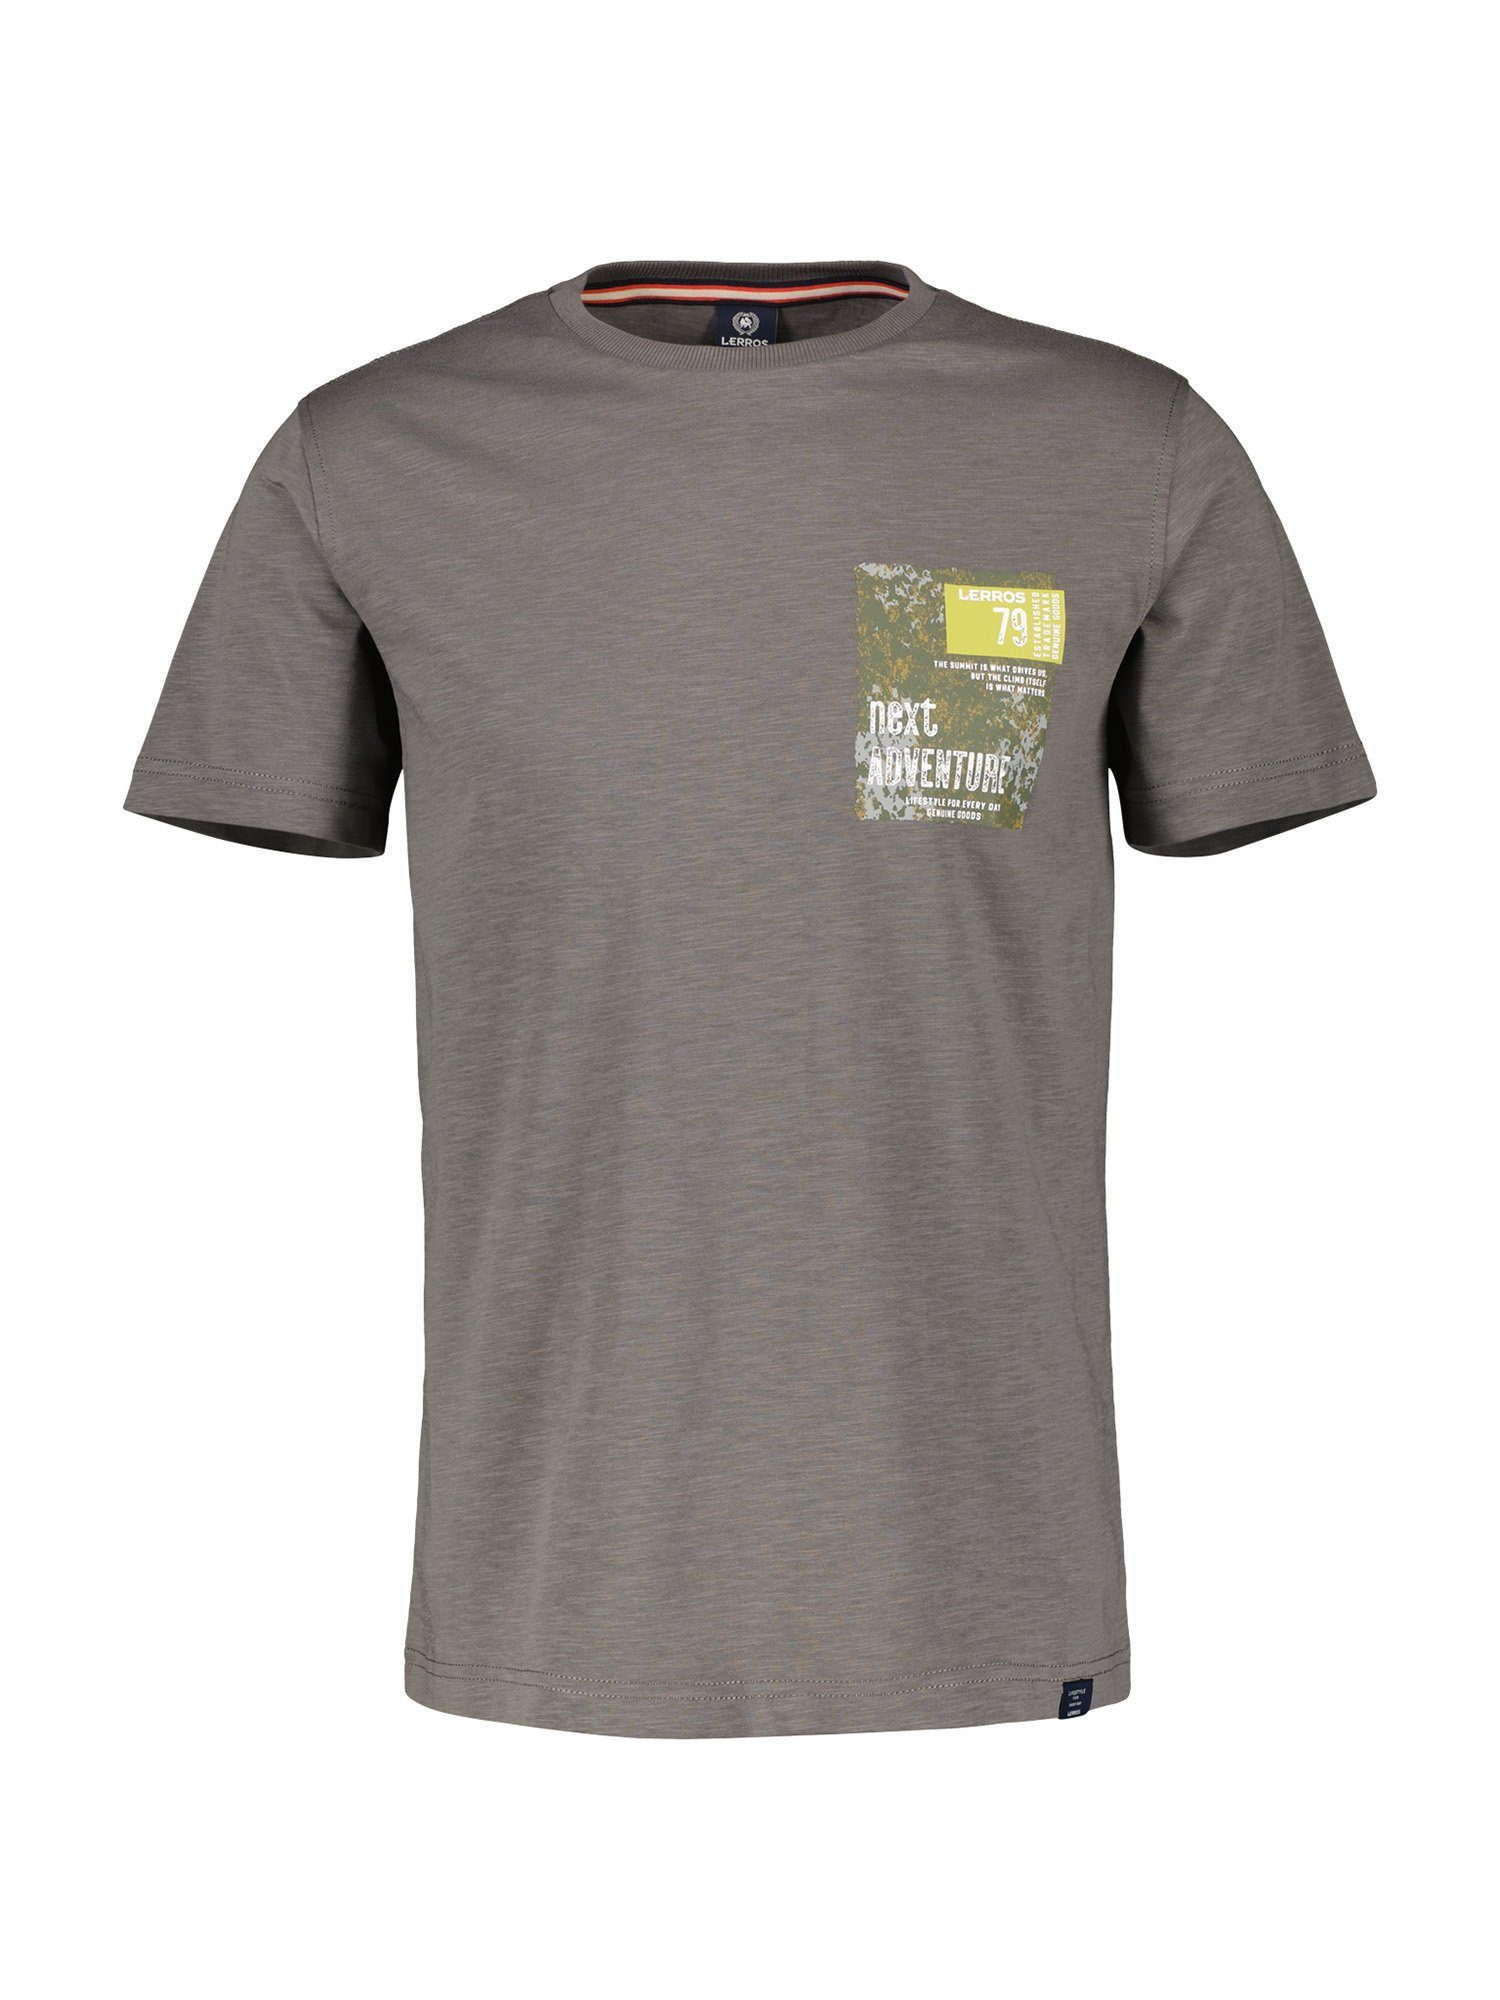 LERROS T-Shirt LERROS BASALT GREY O-Neck T-Shirt, Brustprint